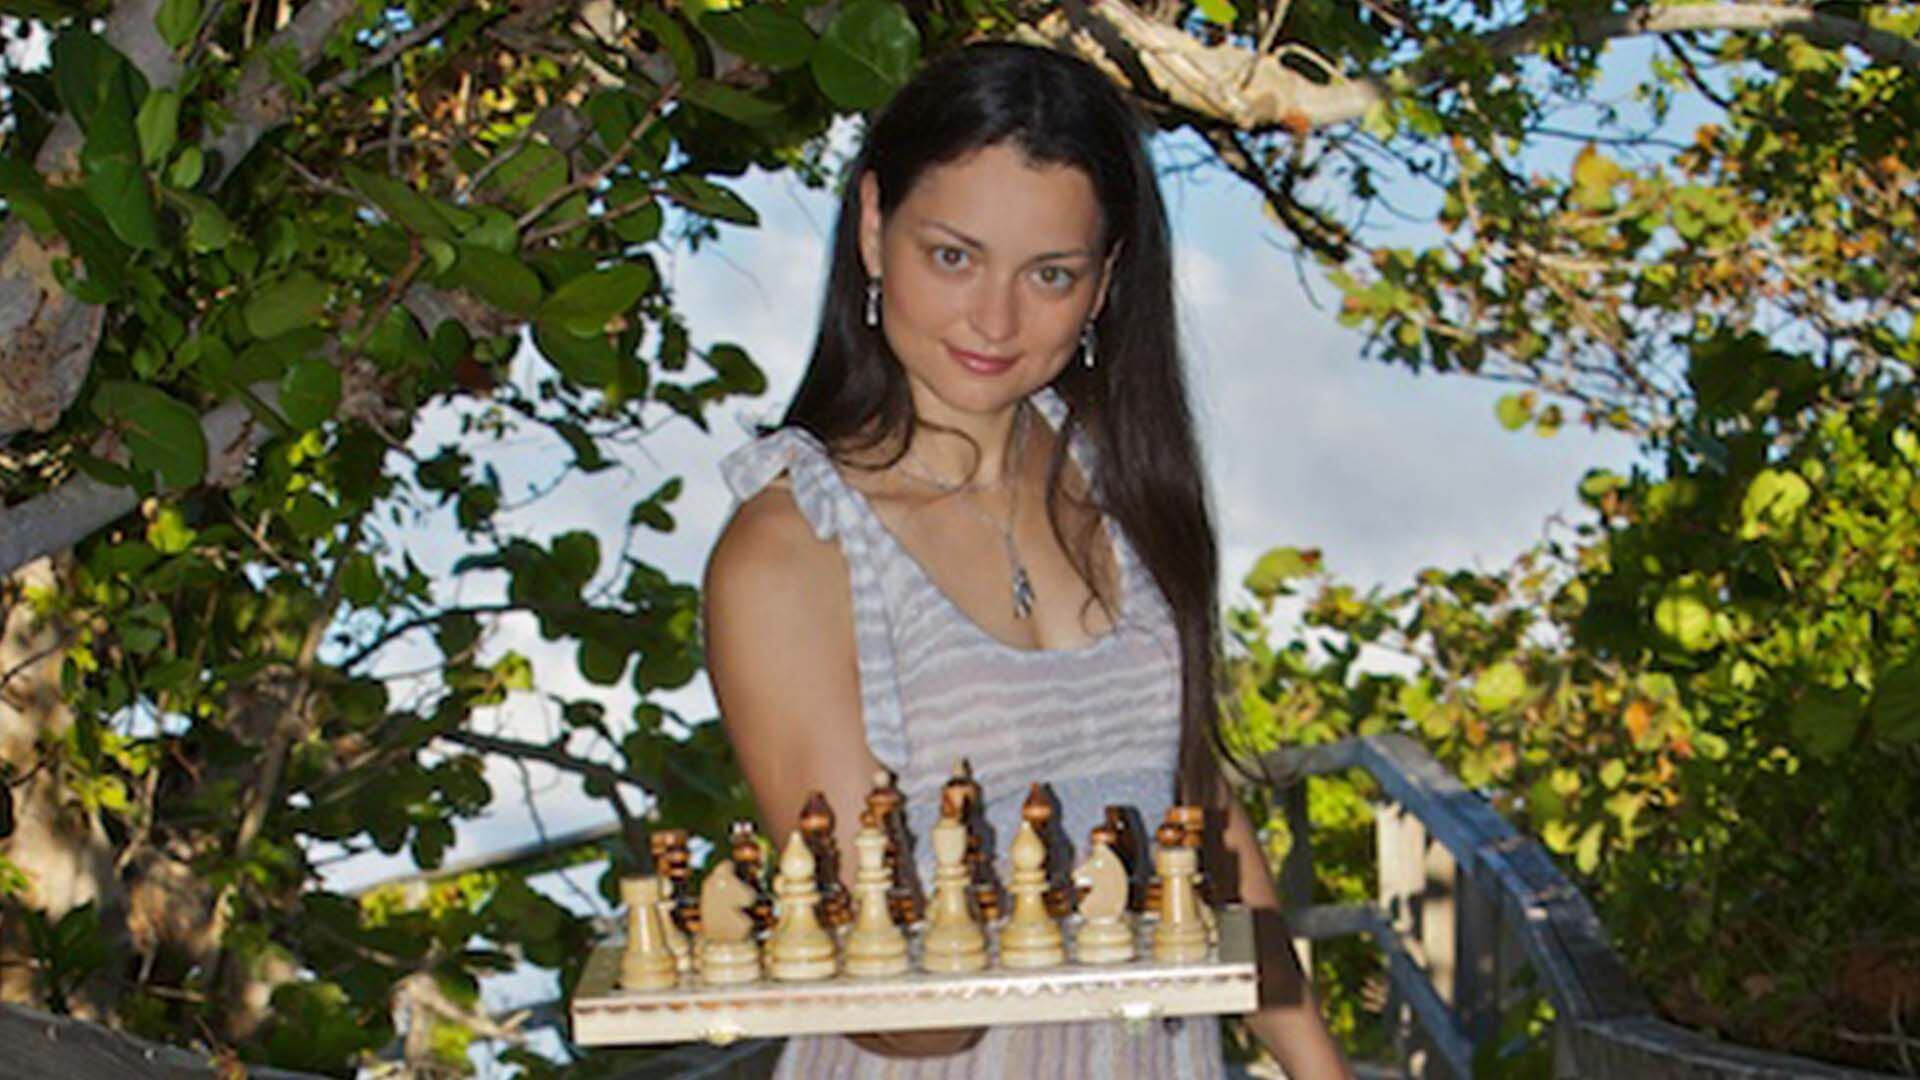 La rusa Alexandra Kosteniuk dejó su país para representar a Suiza. Crédito: ChessQueen